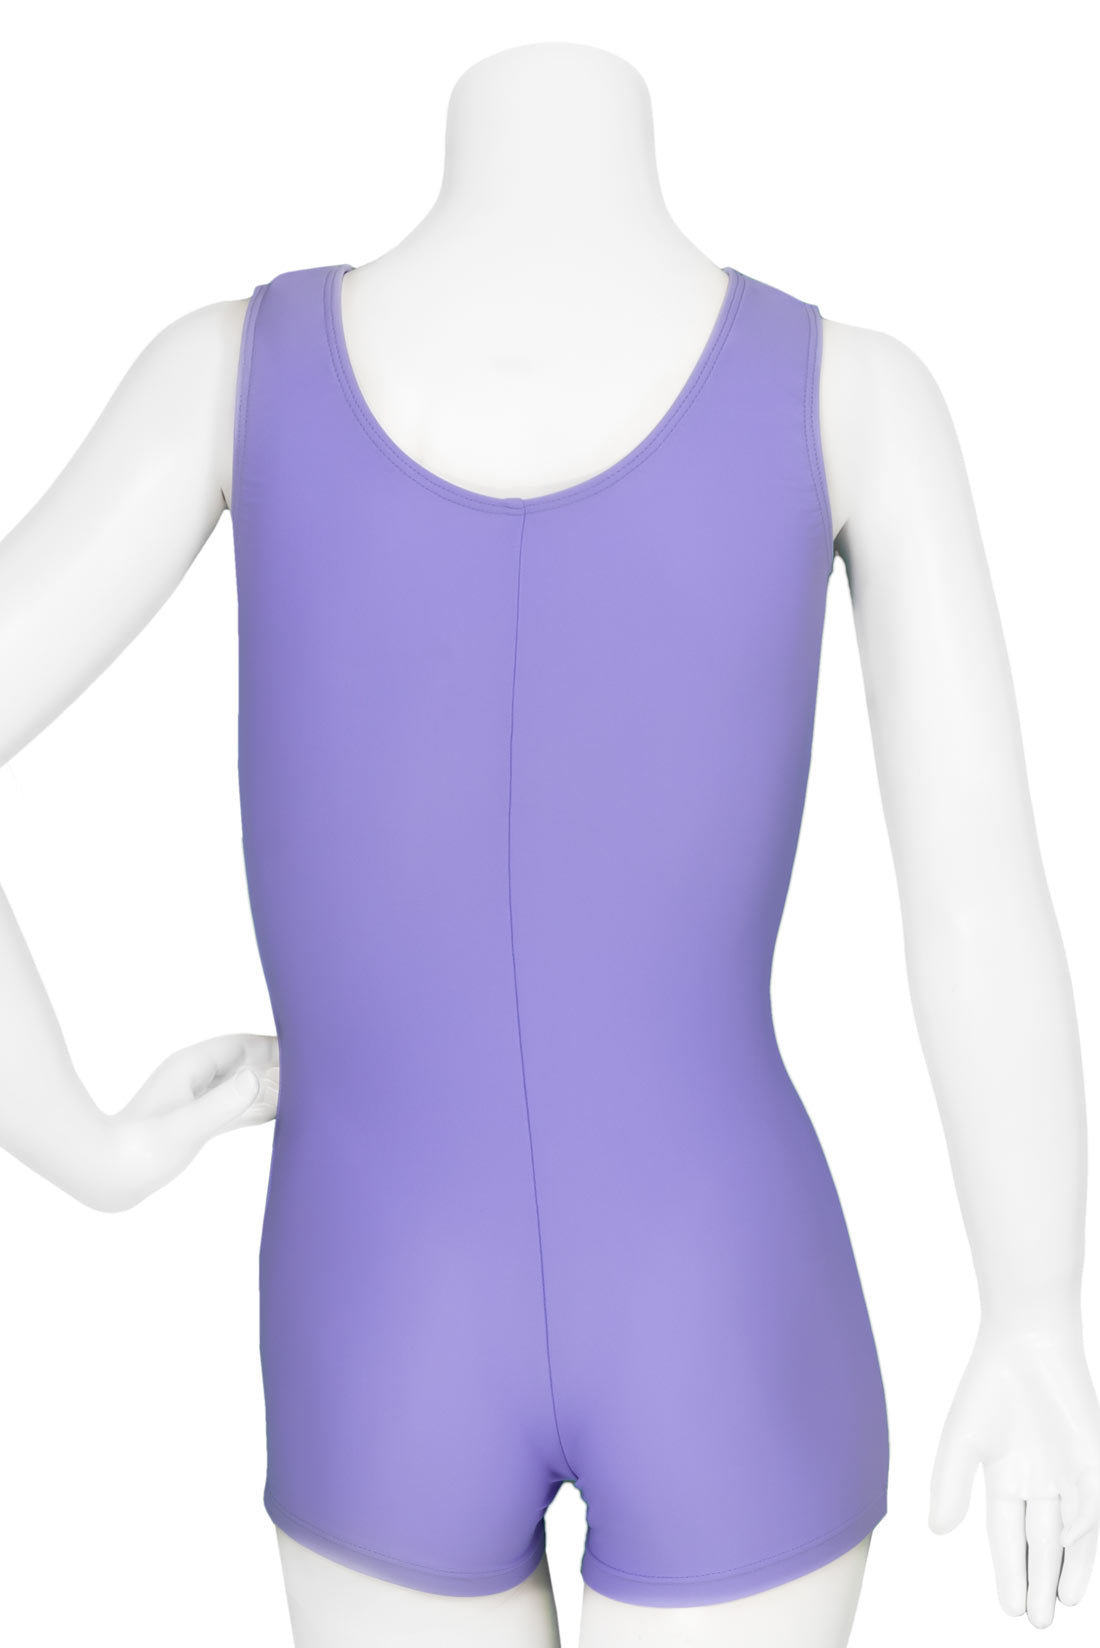 Solid purple gymnastics unitard for girls by Destira, 2024